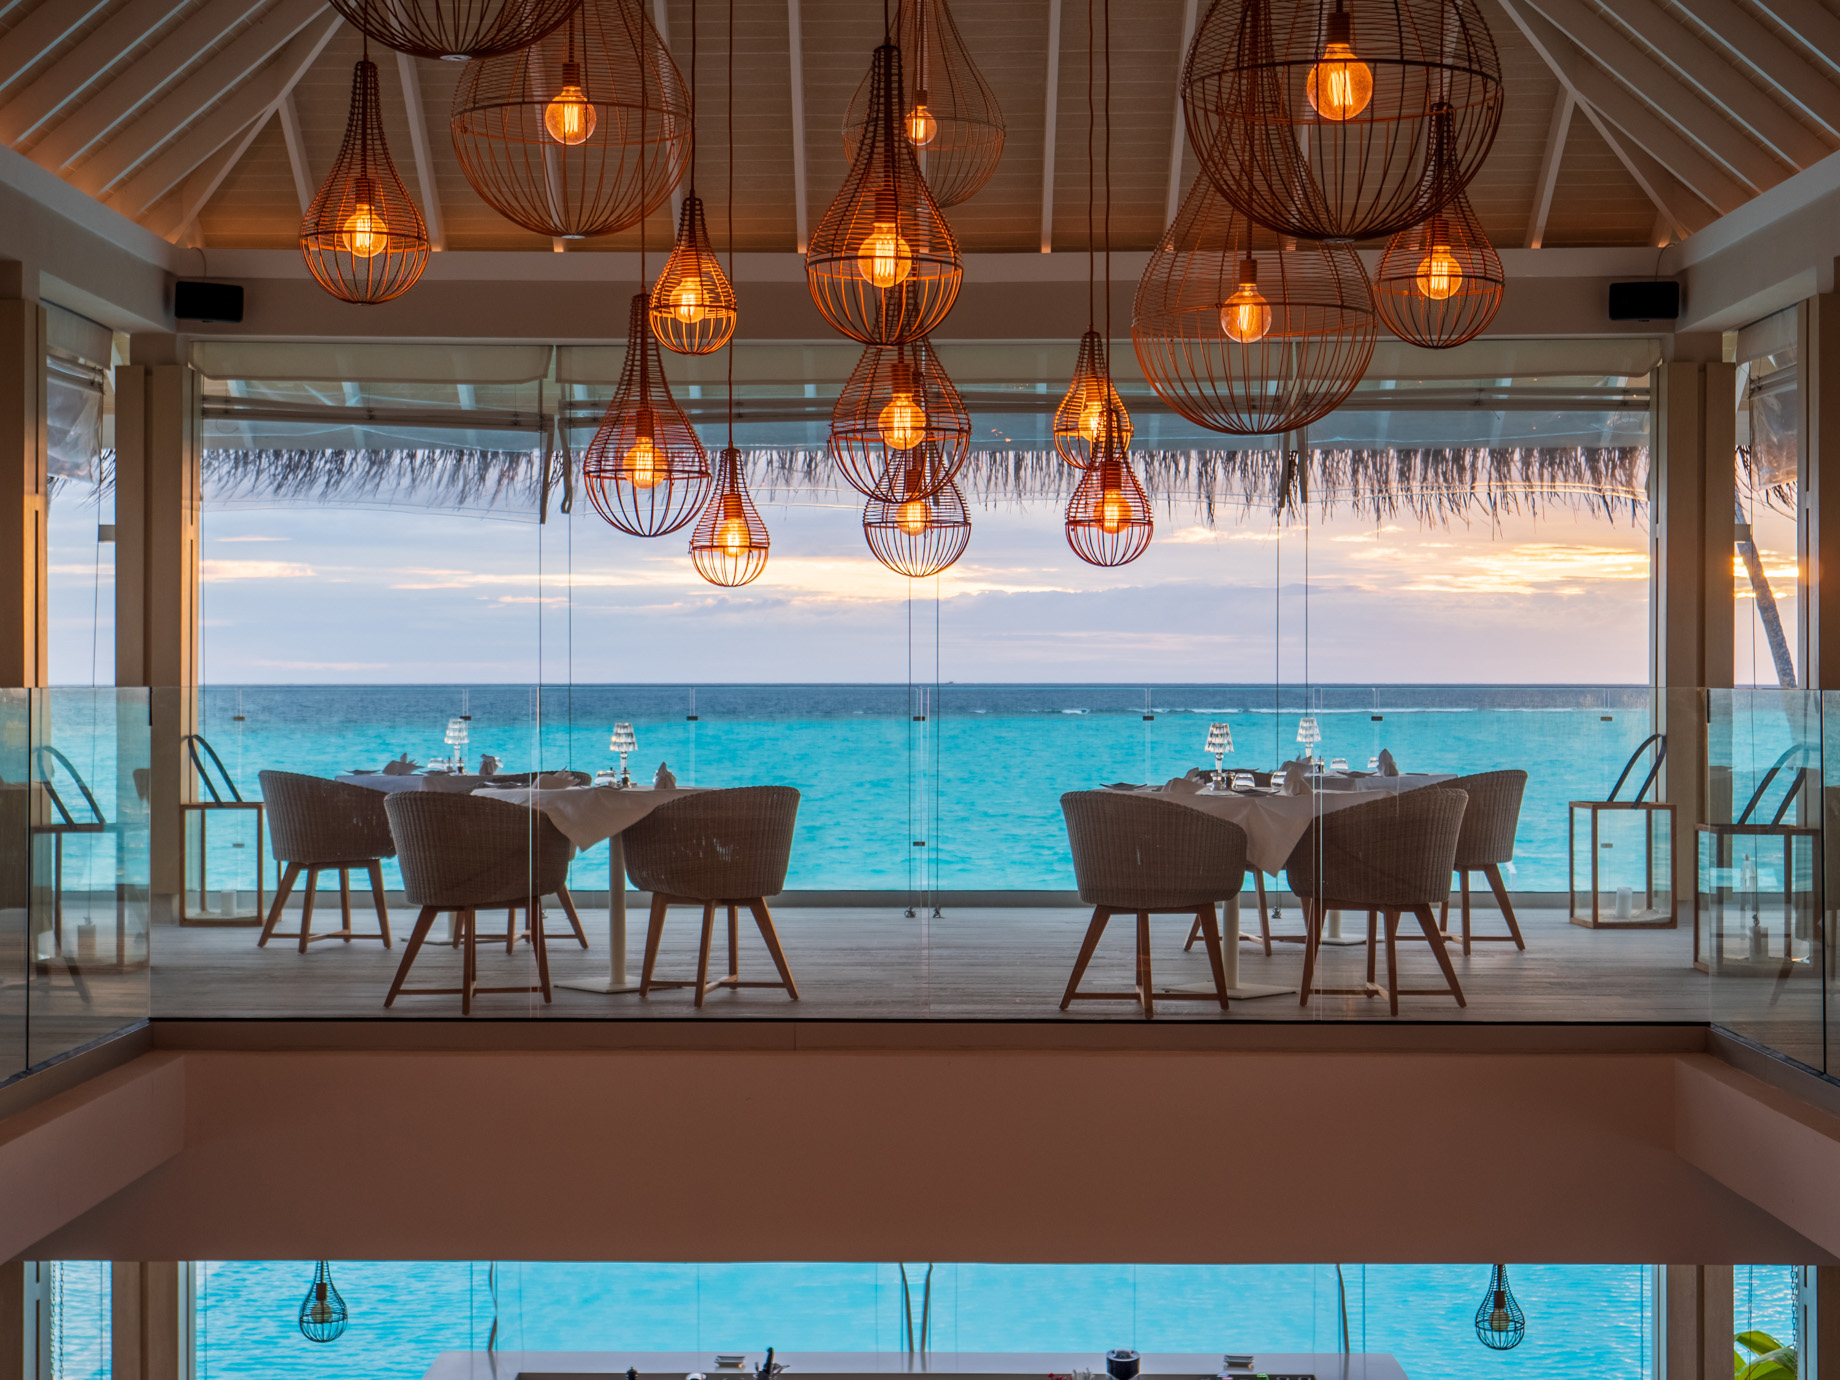 Baglioni Resort Maldives – Maagau Island, Rinbudhoo, Maldives – Gusto Restaurant Ocean View